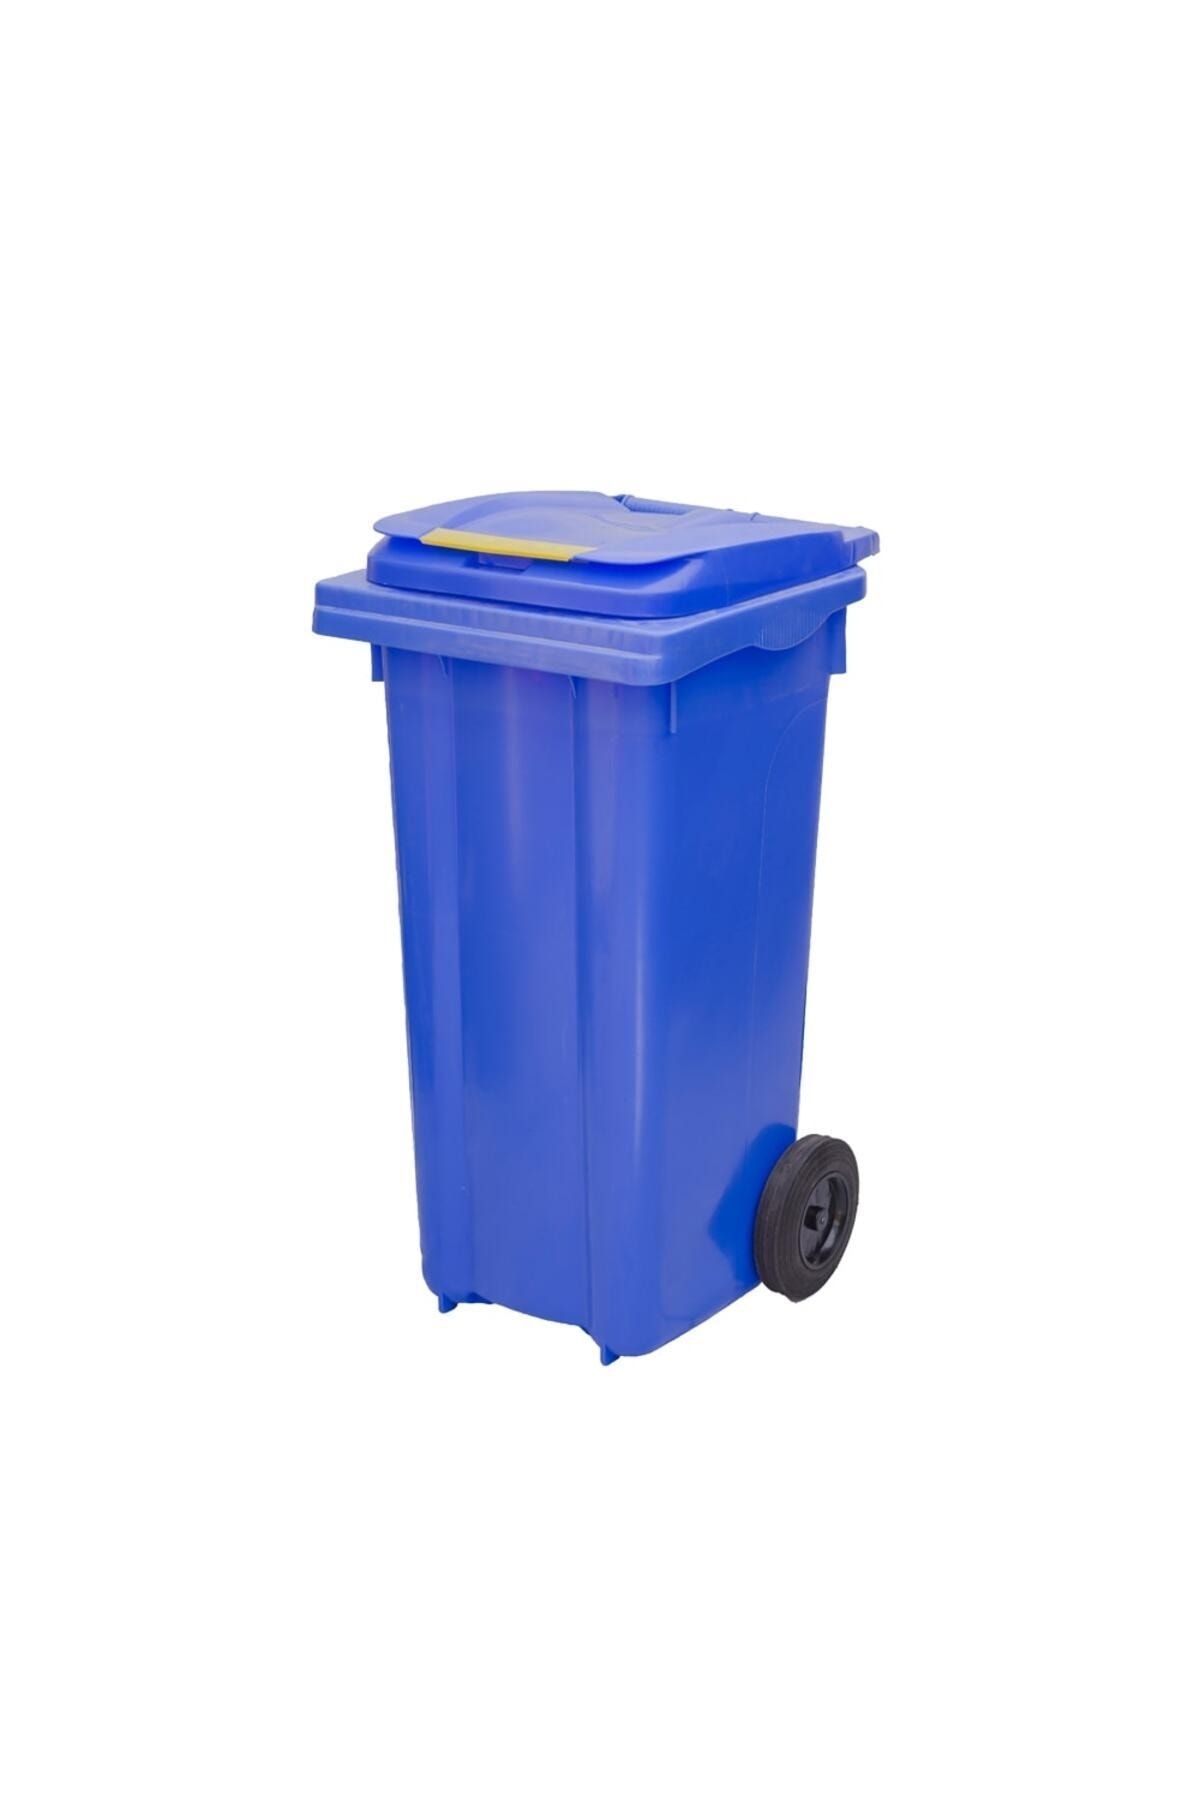 UZEL KONTEYNER 120 Litre Mavi Renk Plastik Çöp Konteyneri